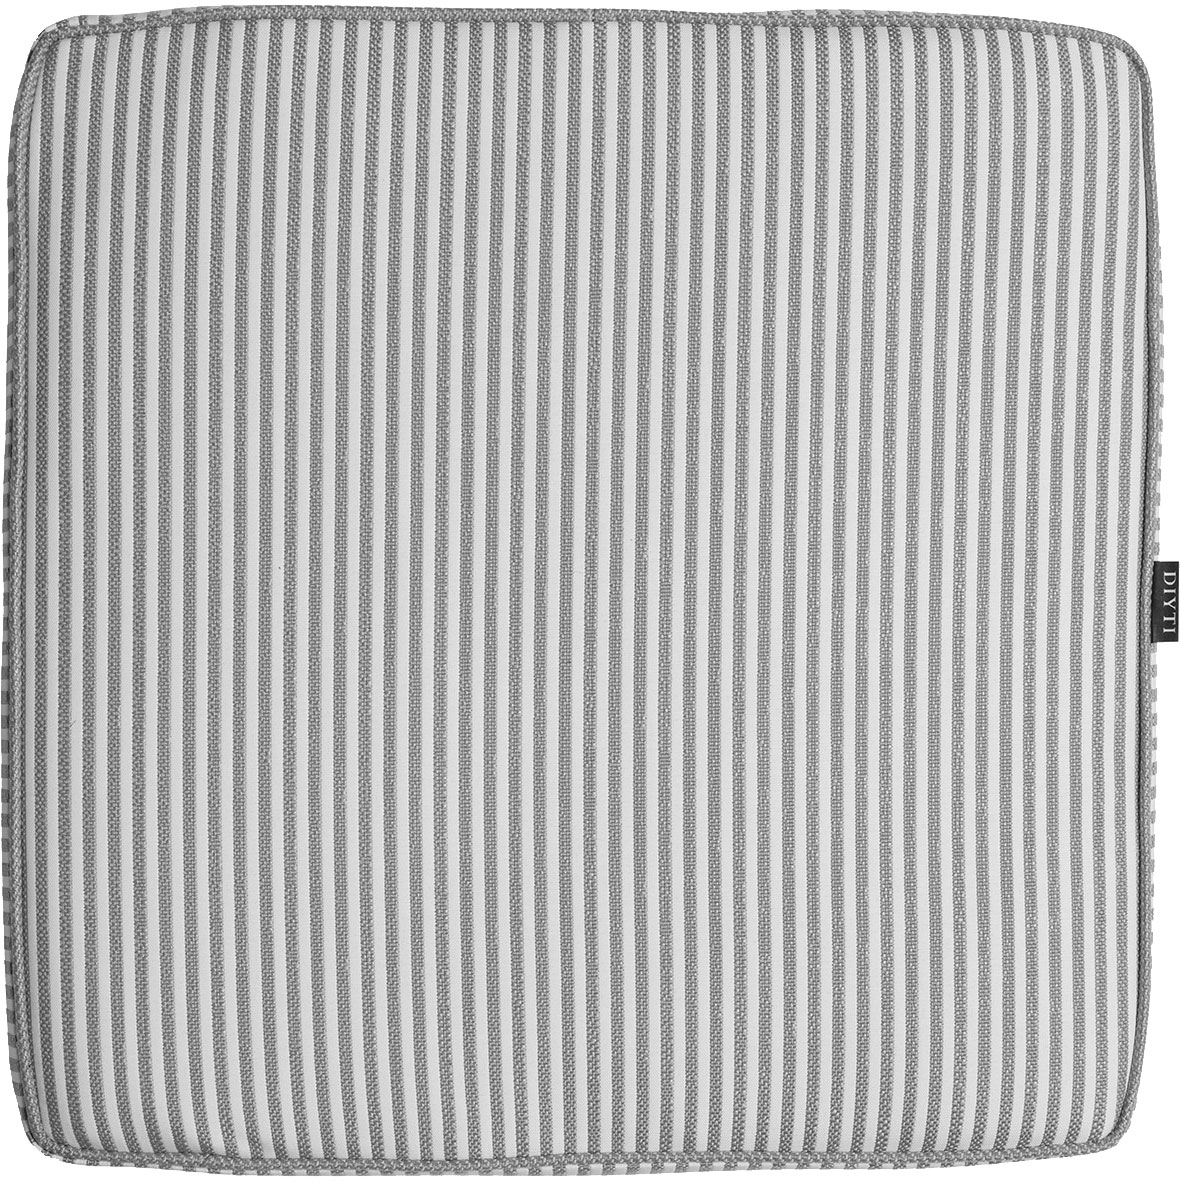 Narrow Stripe Cushion 45x45 cm, Grey